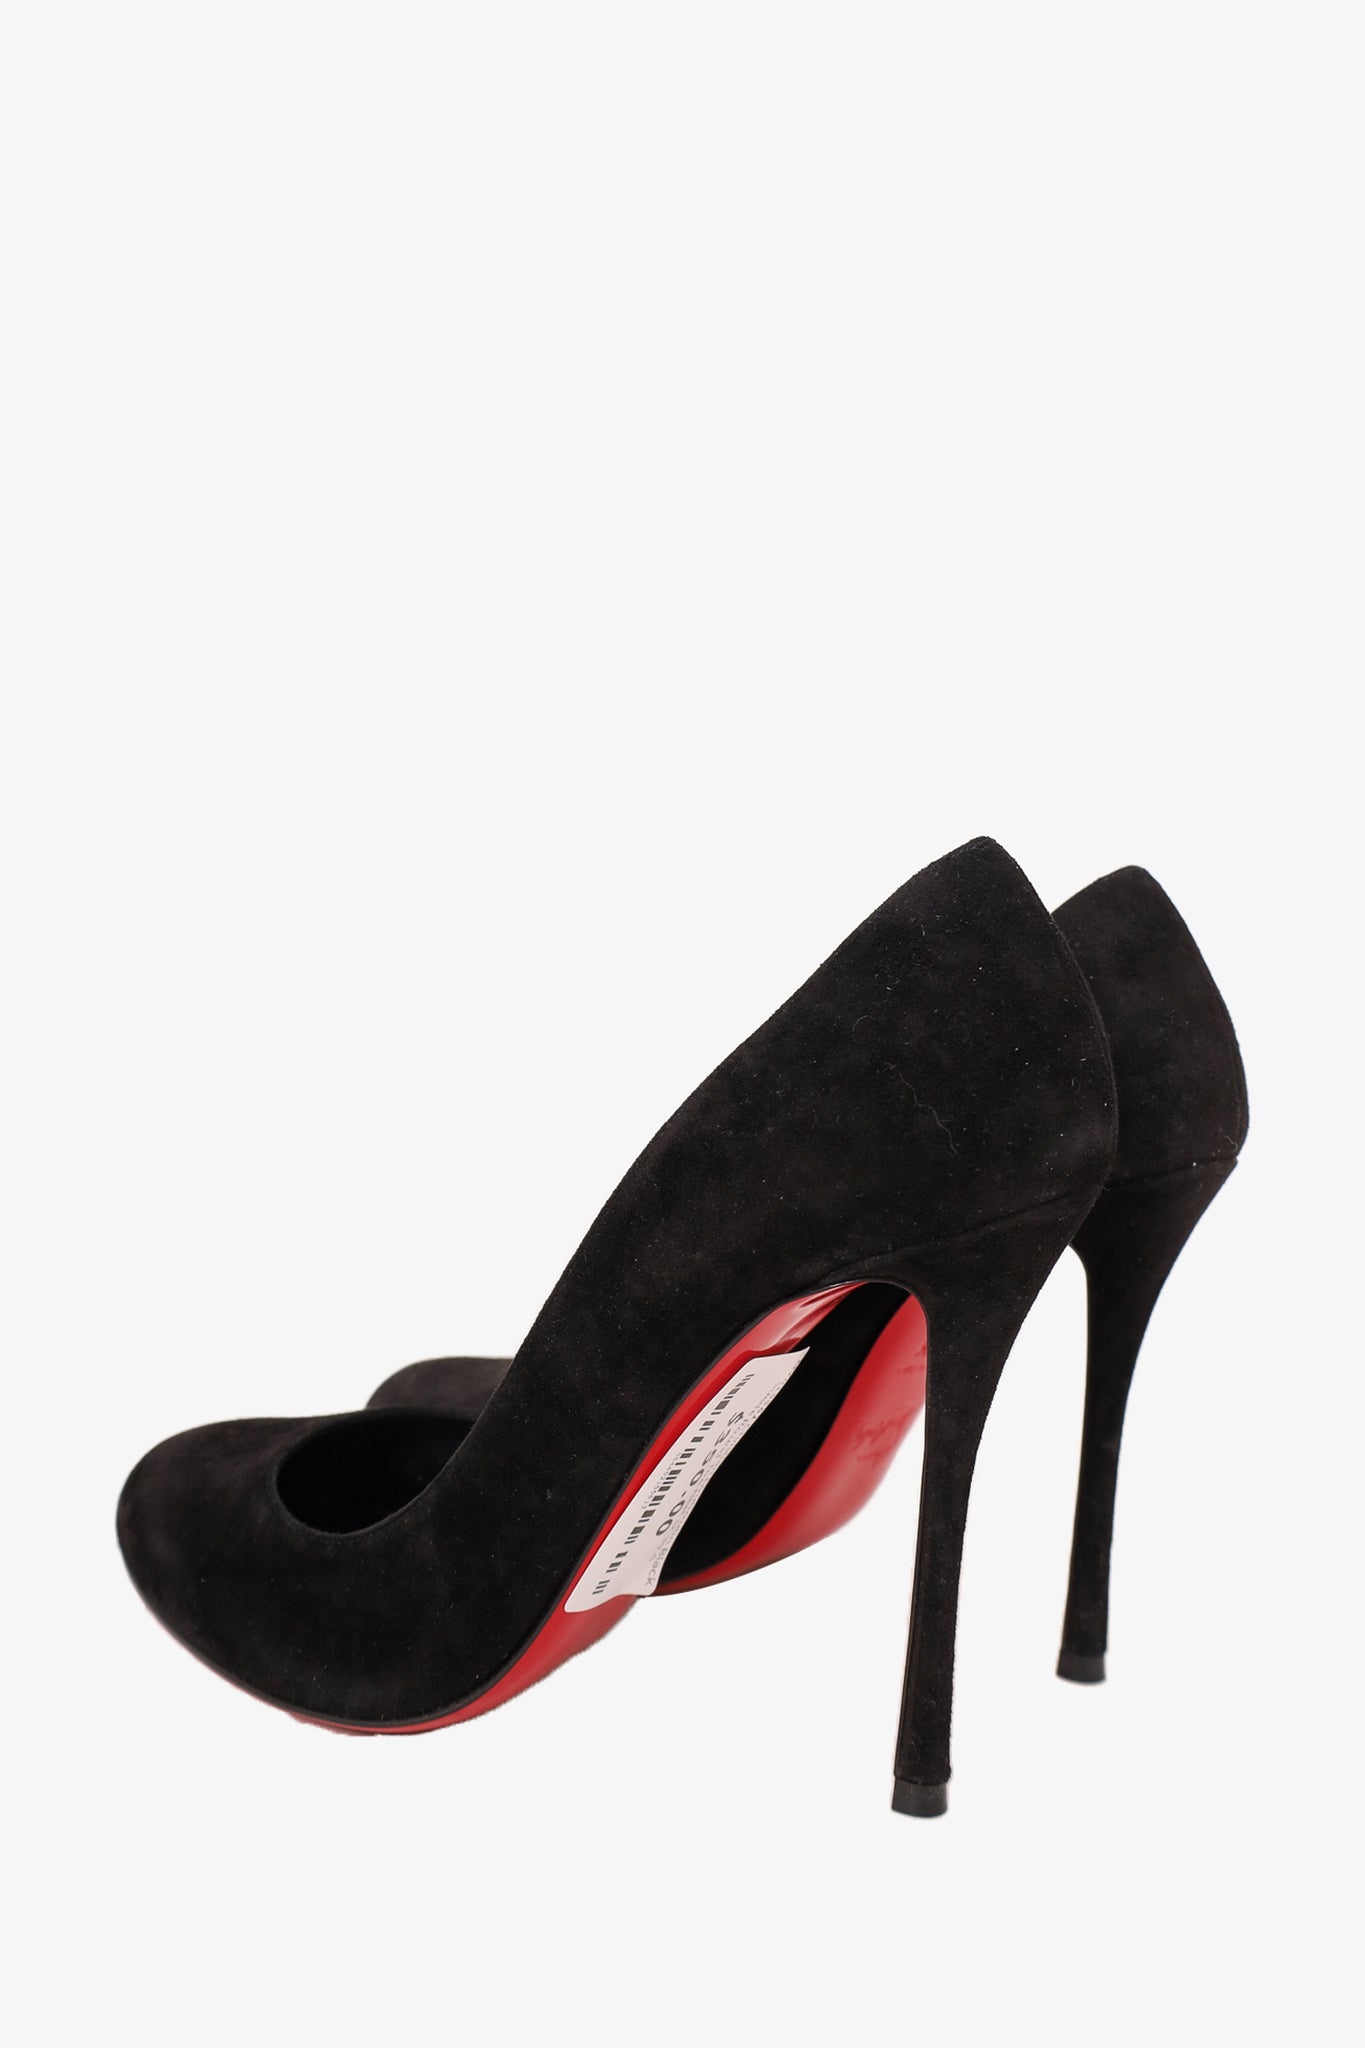 Gucci | Shoes | Authentic Gucci Black Suede Round Toe Stiletto Platform  Heels | Poshmark